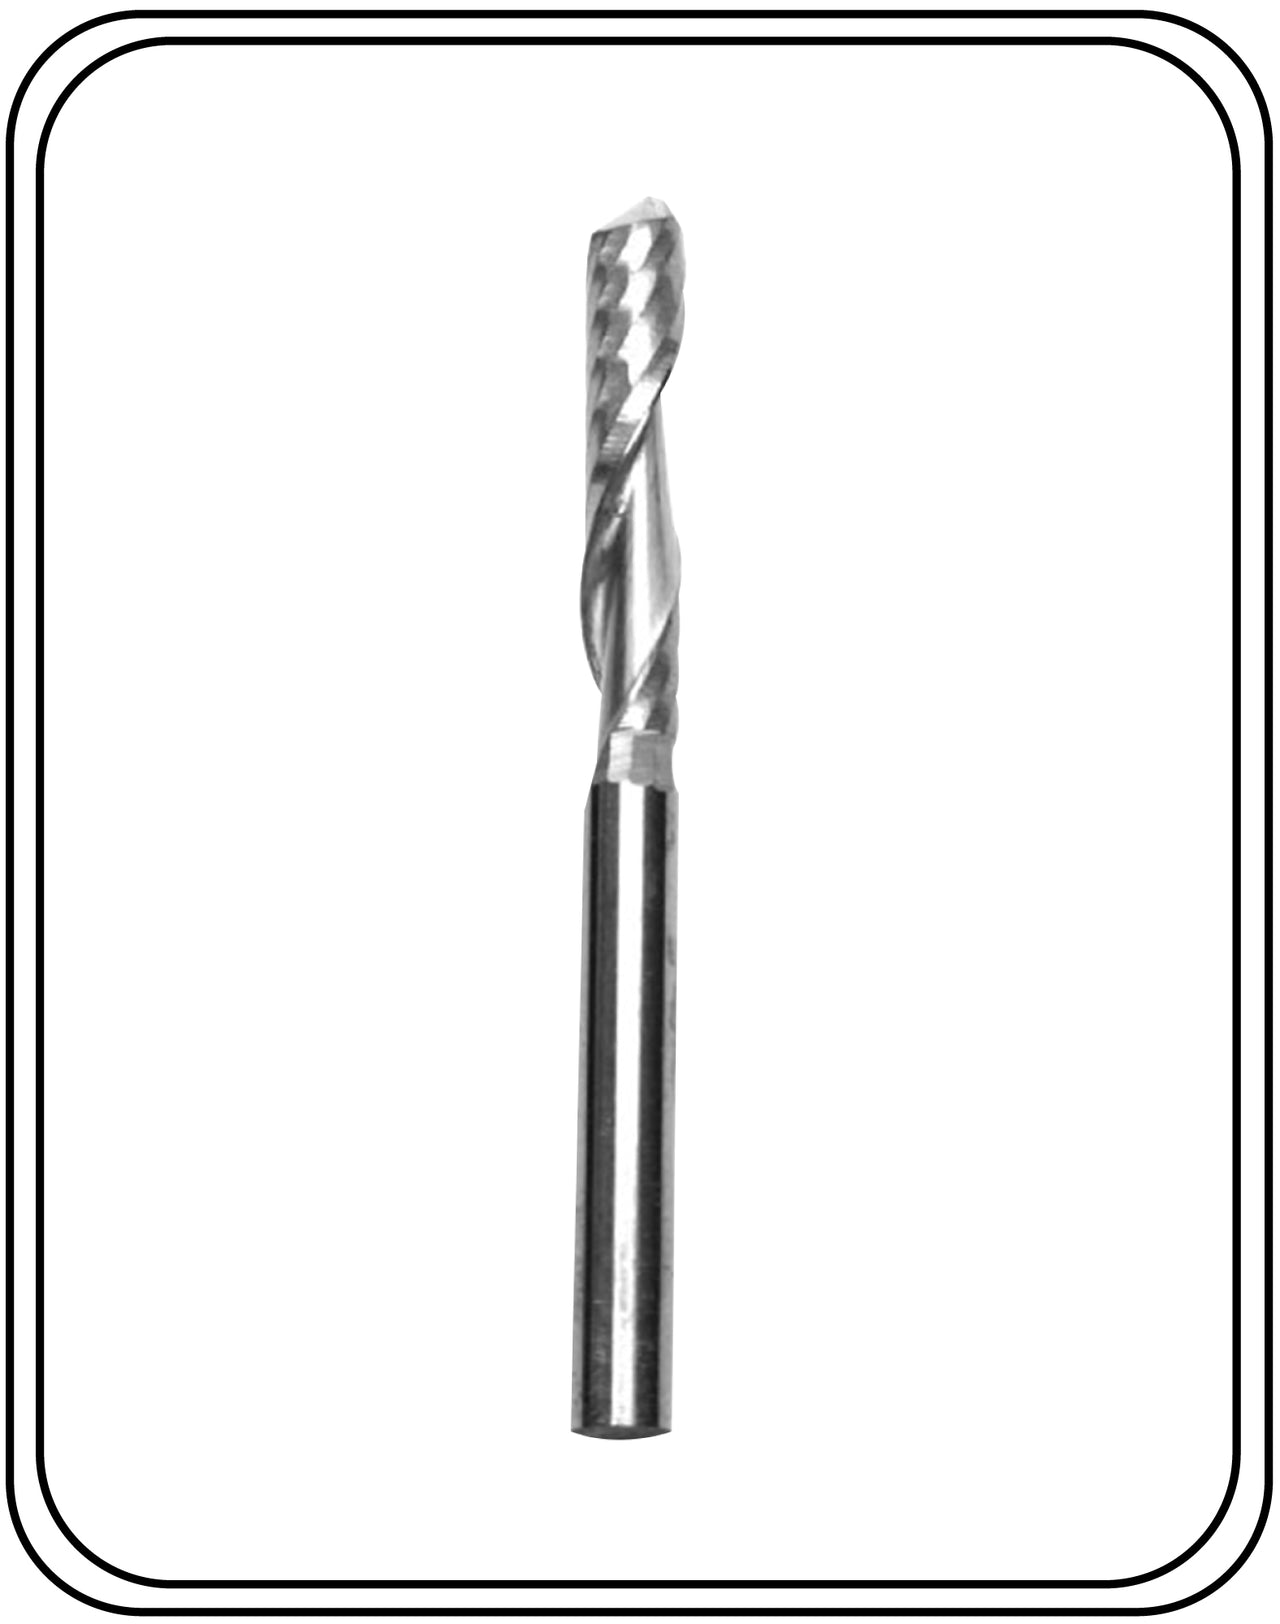 5 mm Single Flute Endmill Carbide | ballnose